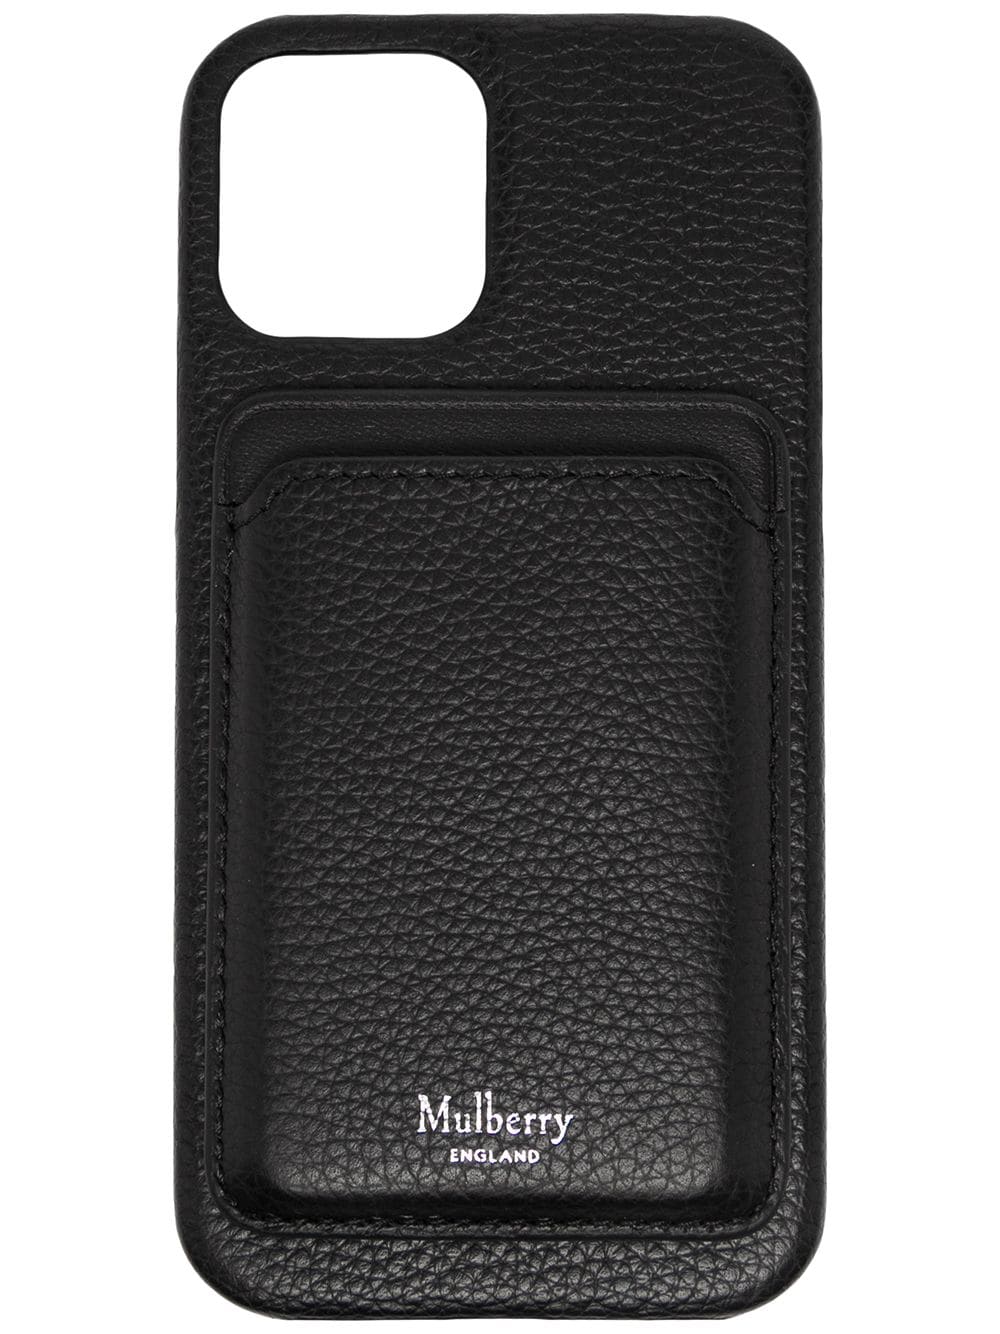 фото Mulberry чехол для iphone 12 с логотипом